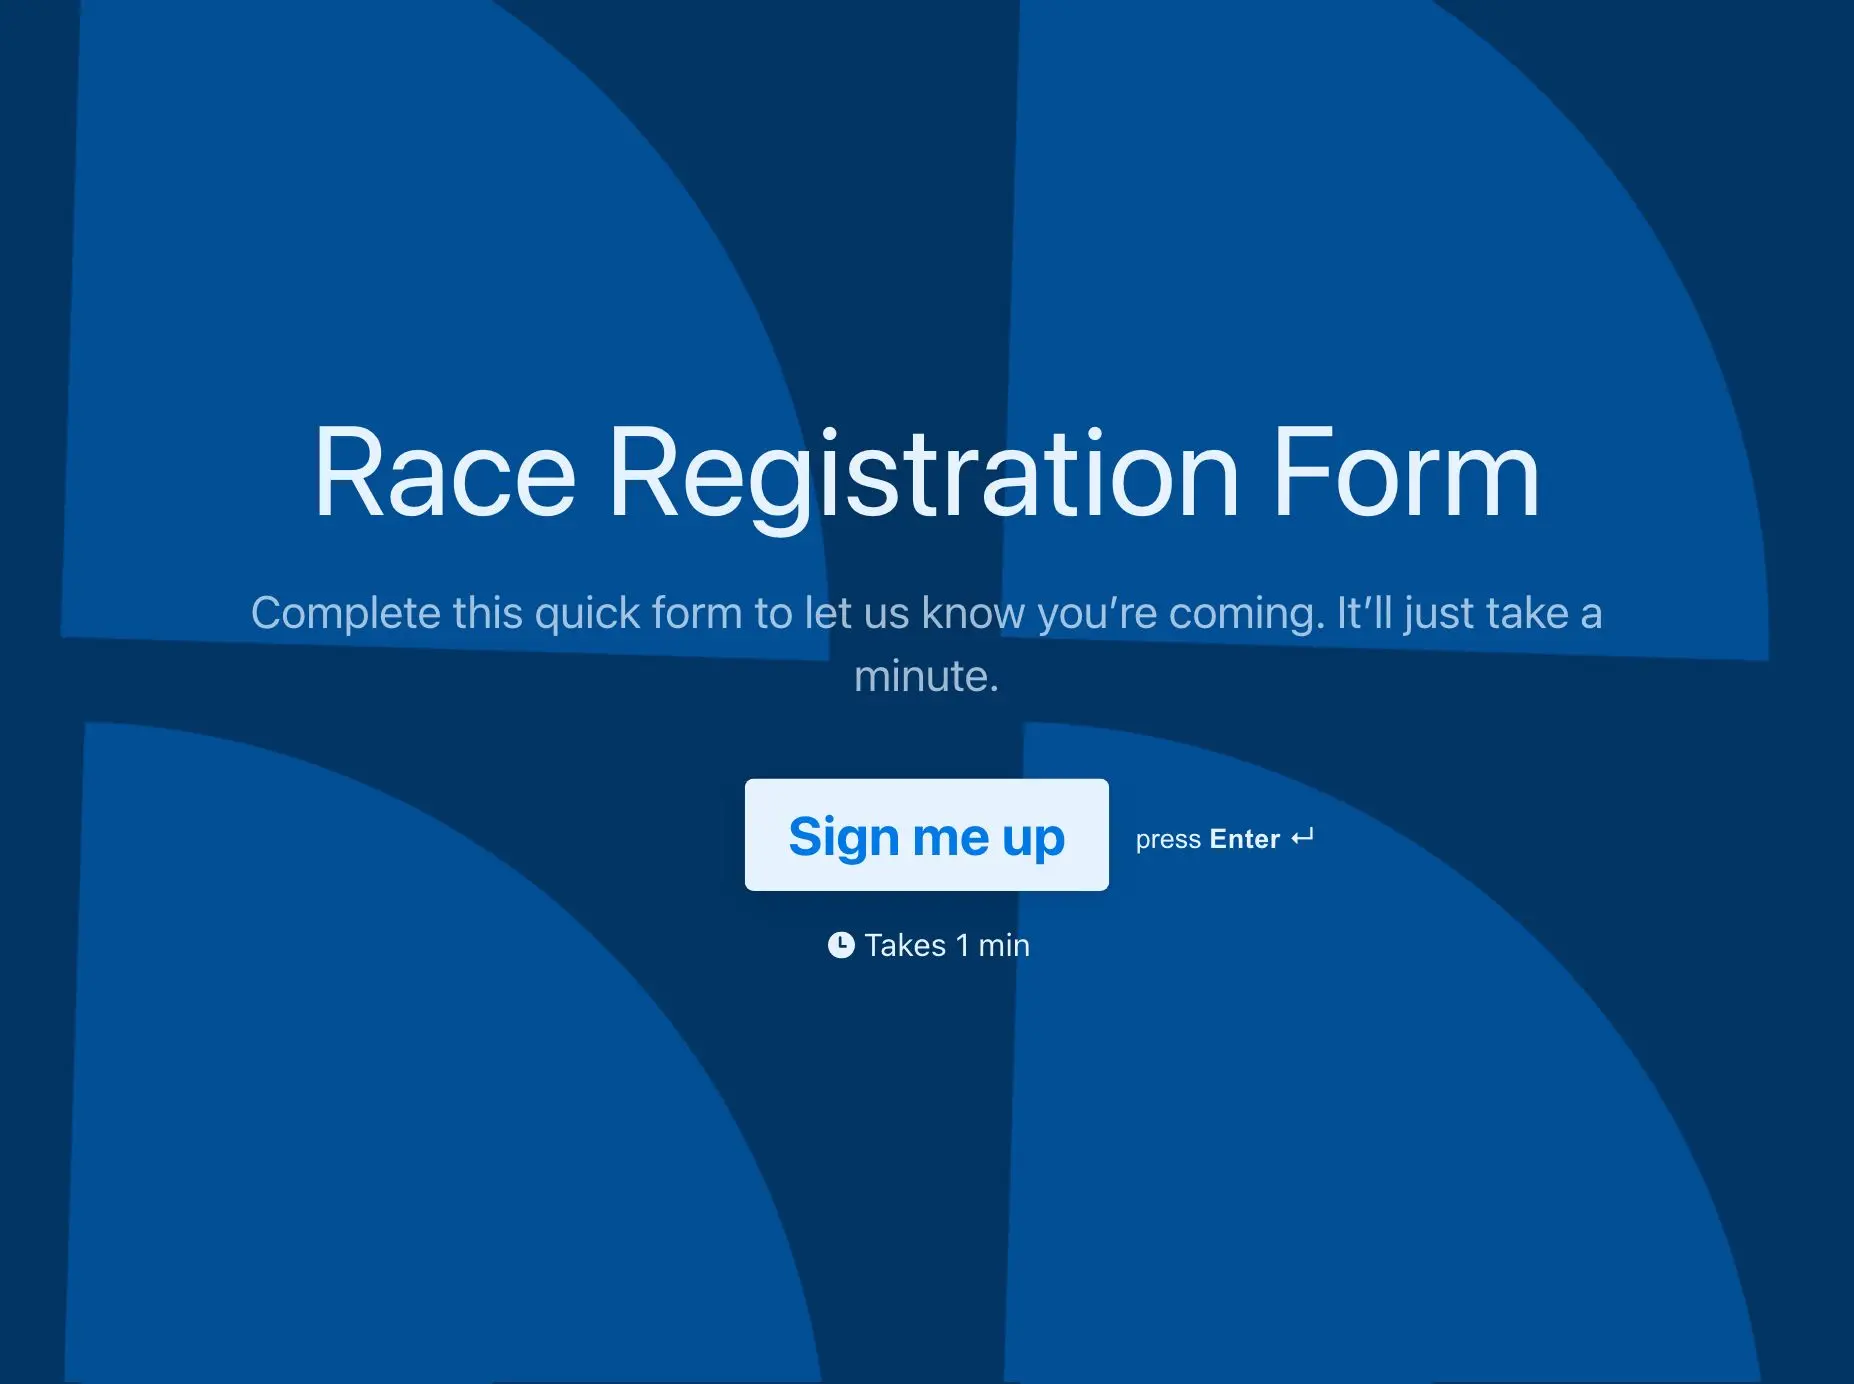 Race Registration Form Template Hero